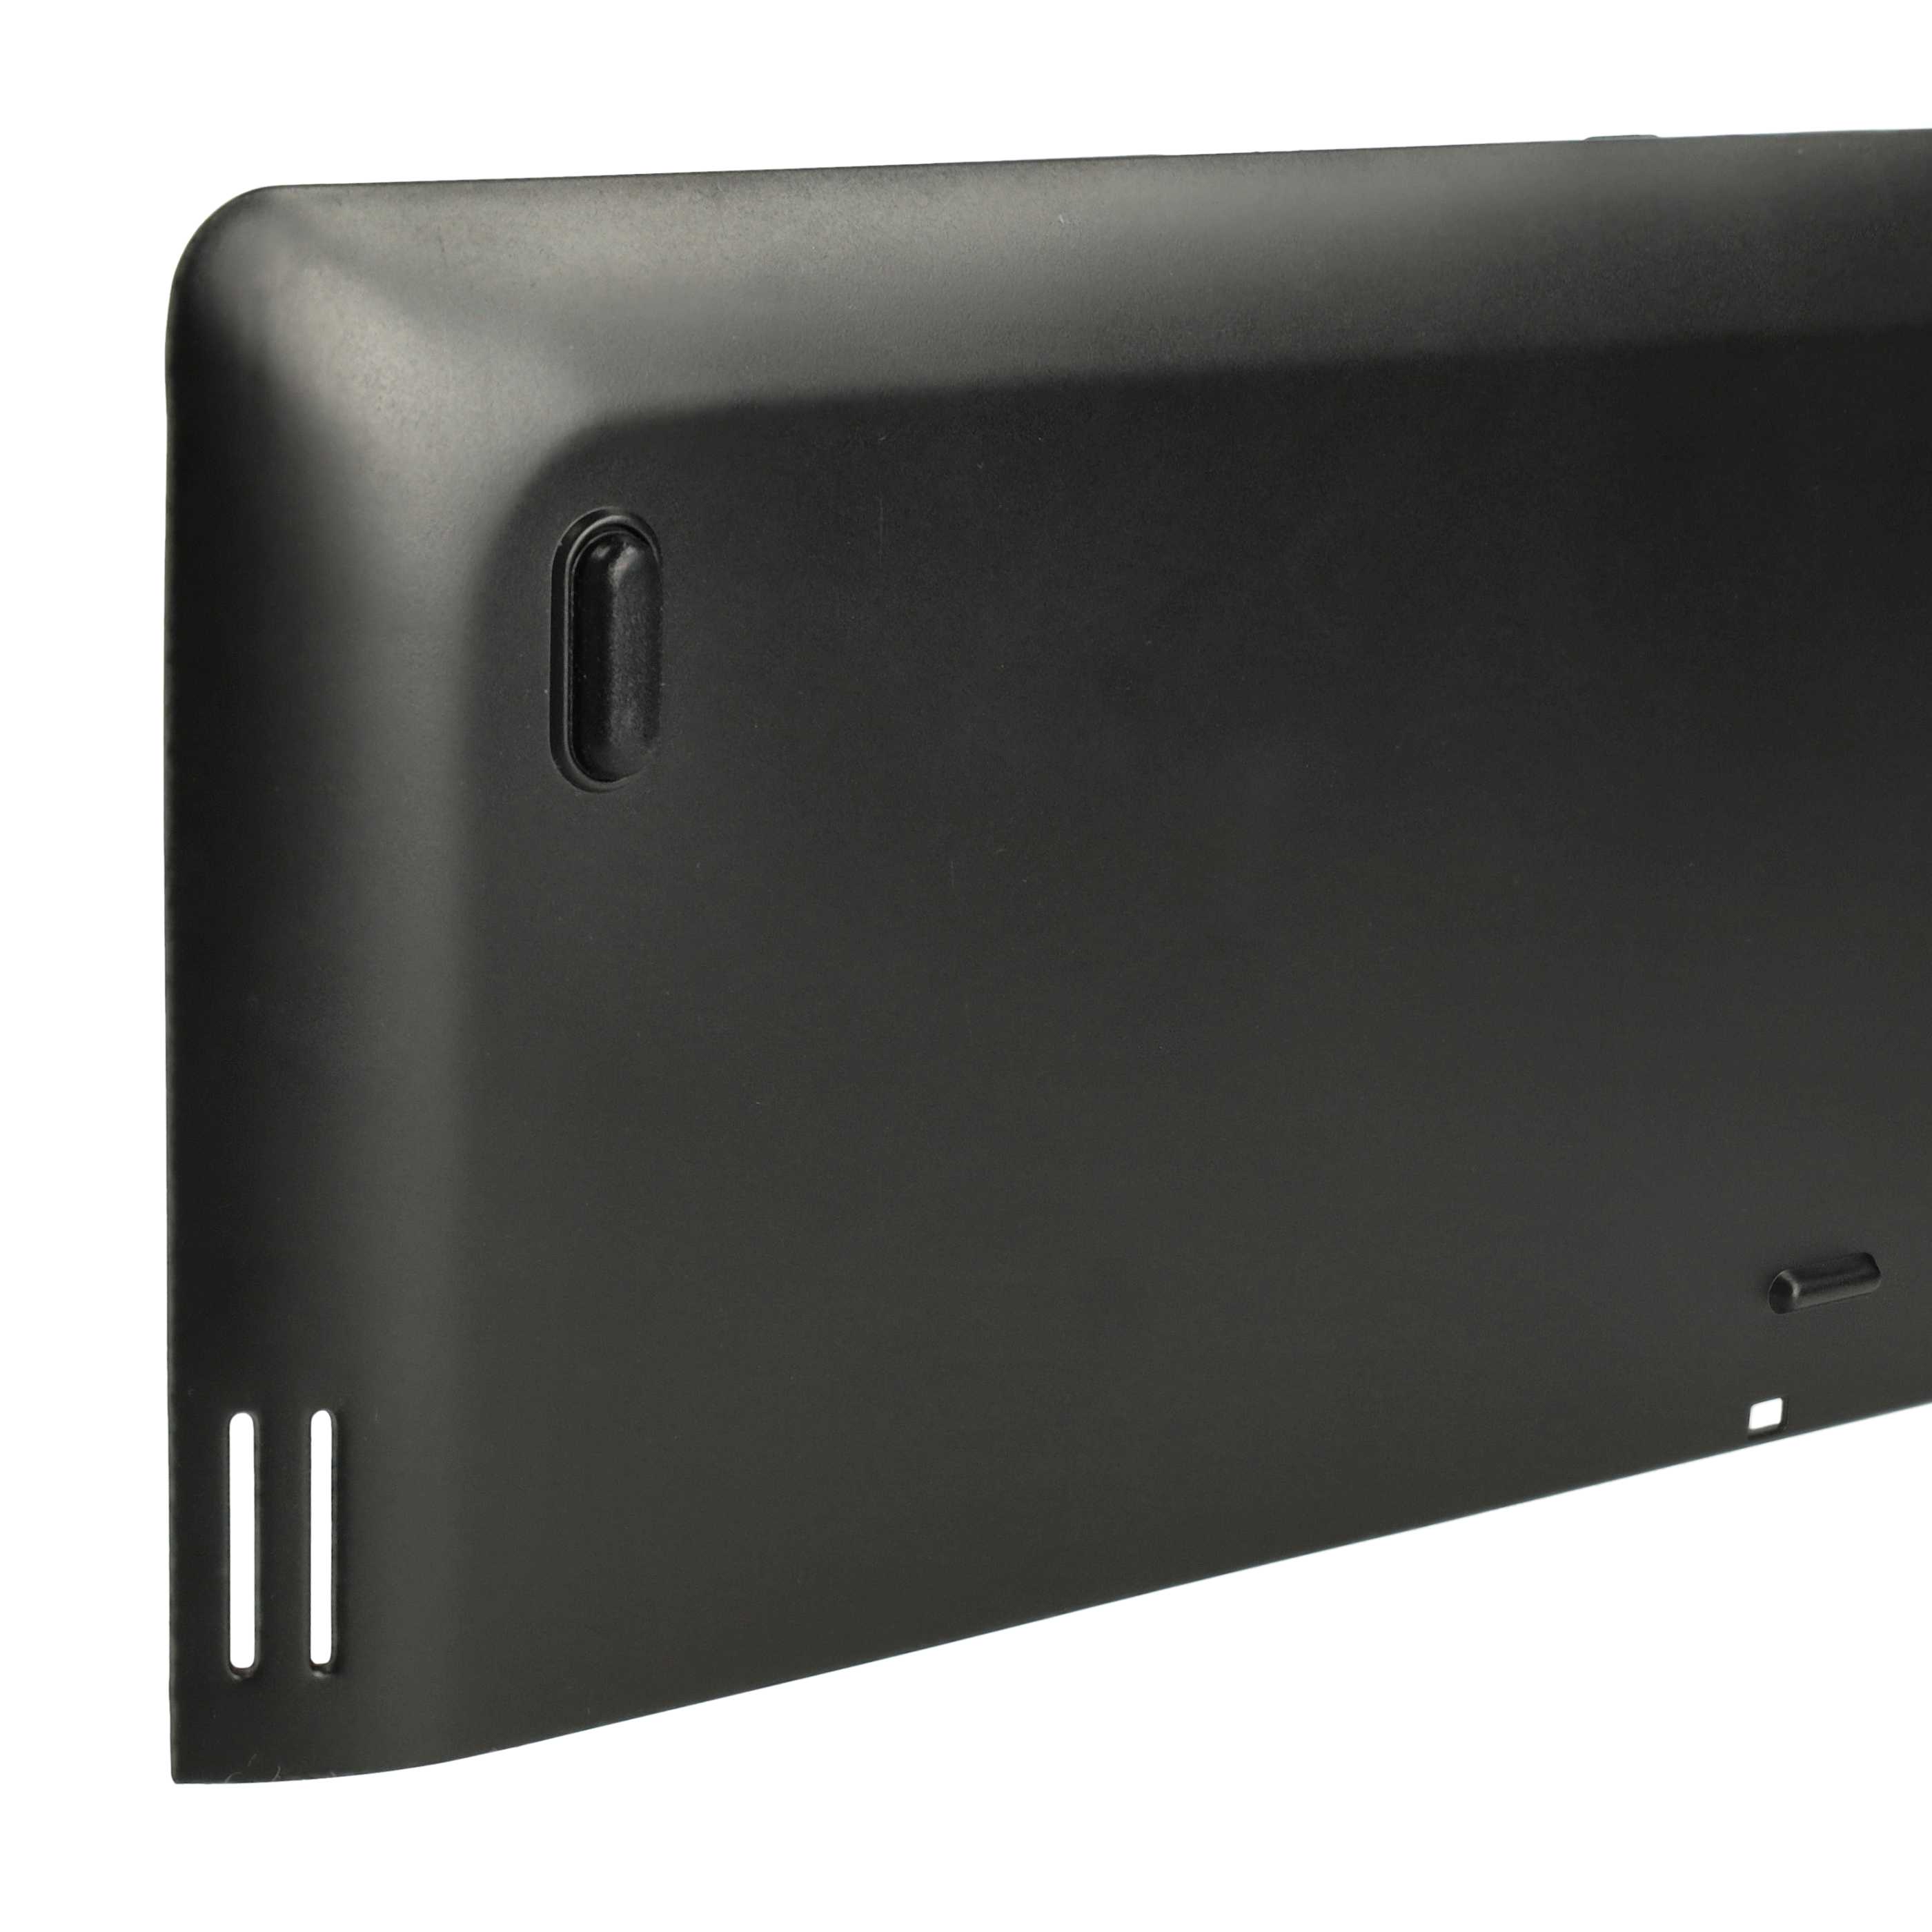 Akumulator do laptopa zamiennik HP 0DO6XL, 698750-171, 698943-001, 0D06XL - 4400 mAh 11,1 V LiPo, czarny